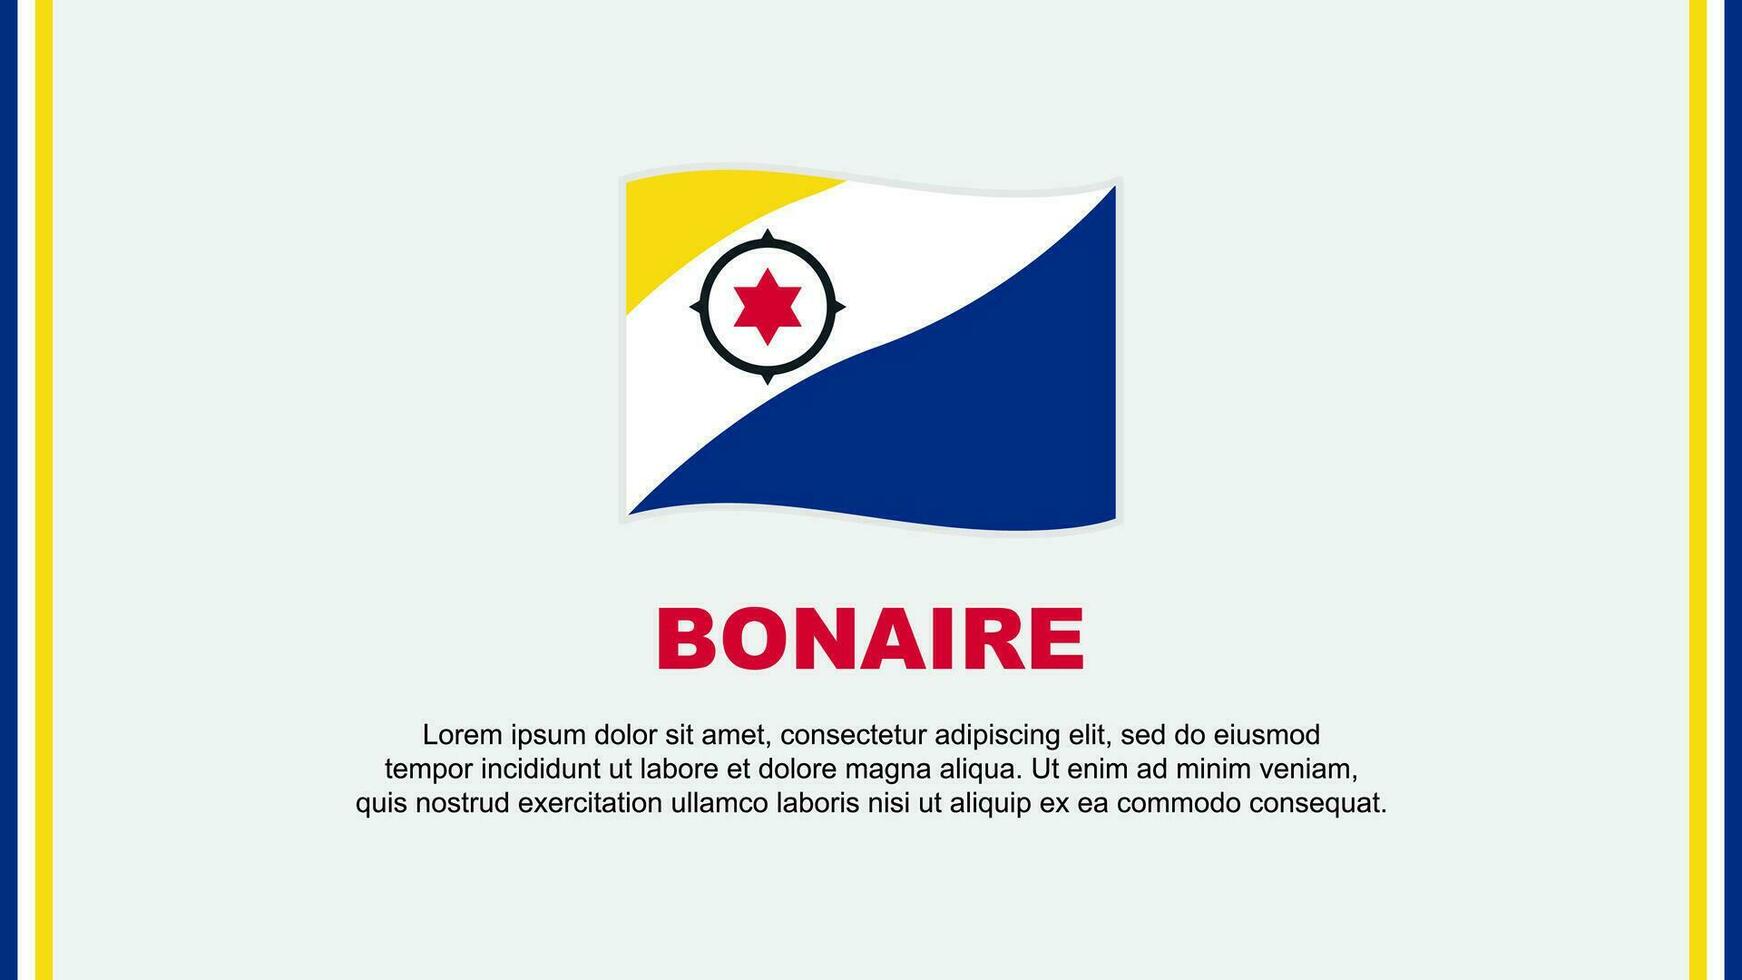 Bonaire Flag Abstract Background Design Template. Bonaire Independence Day Banner Social Media Vector Illustration. Bonaire Cartoon